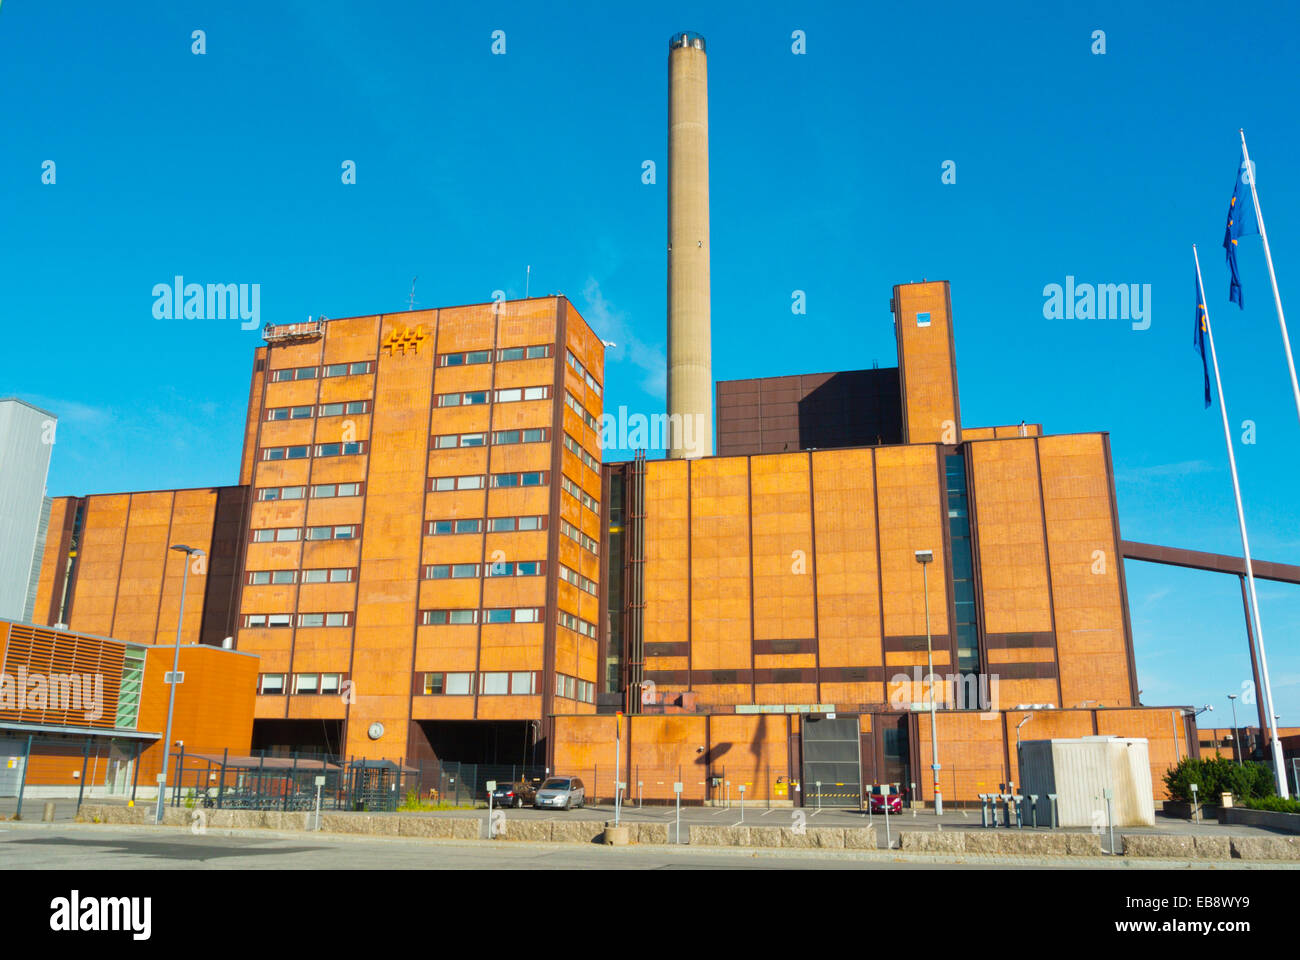 Hanasaaren hiilivoimalaitos, Hanasaari coal plant, Helsinki, Finland, Europe Stock Photo